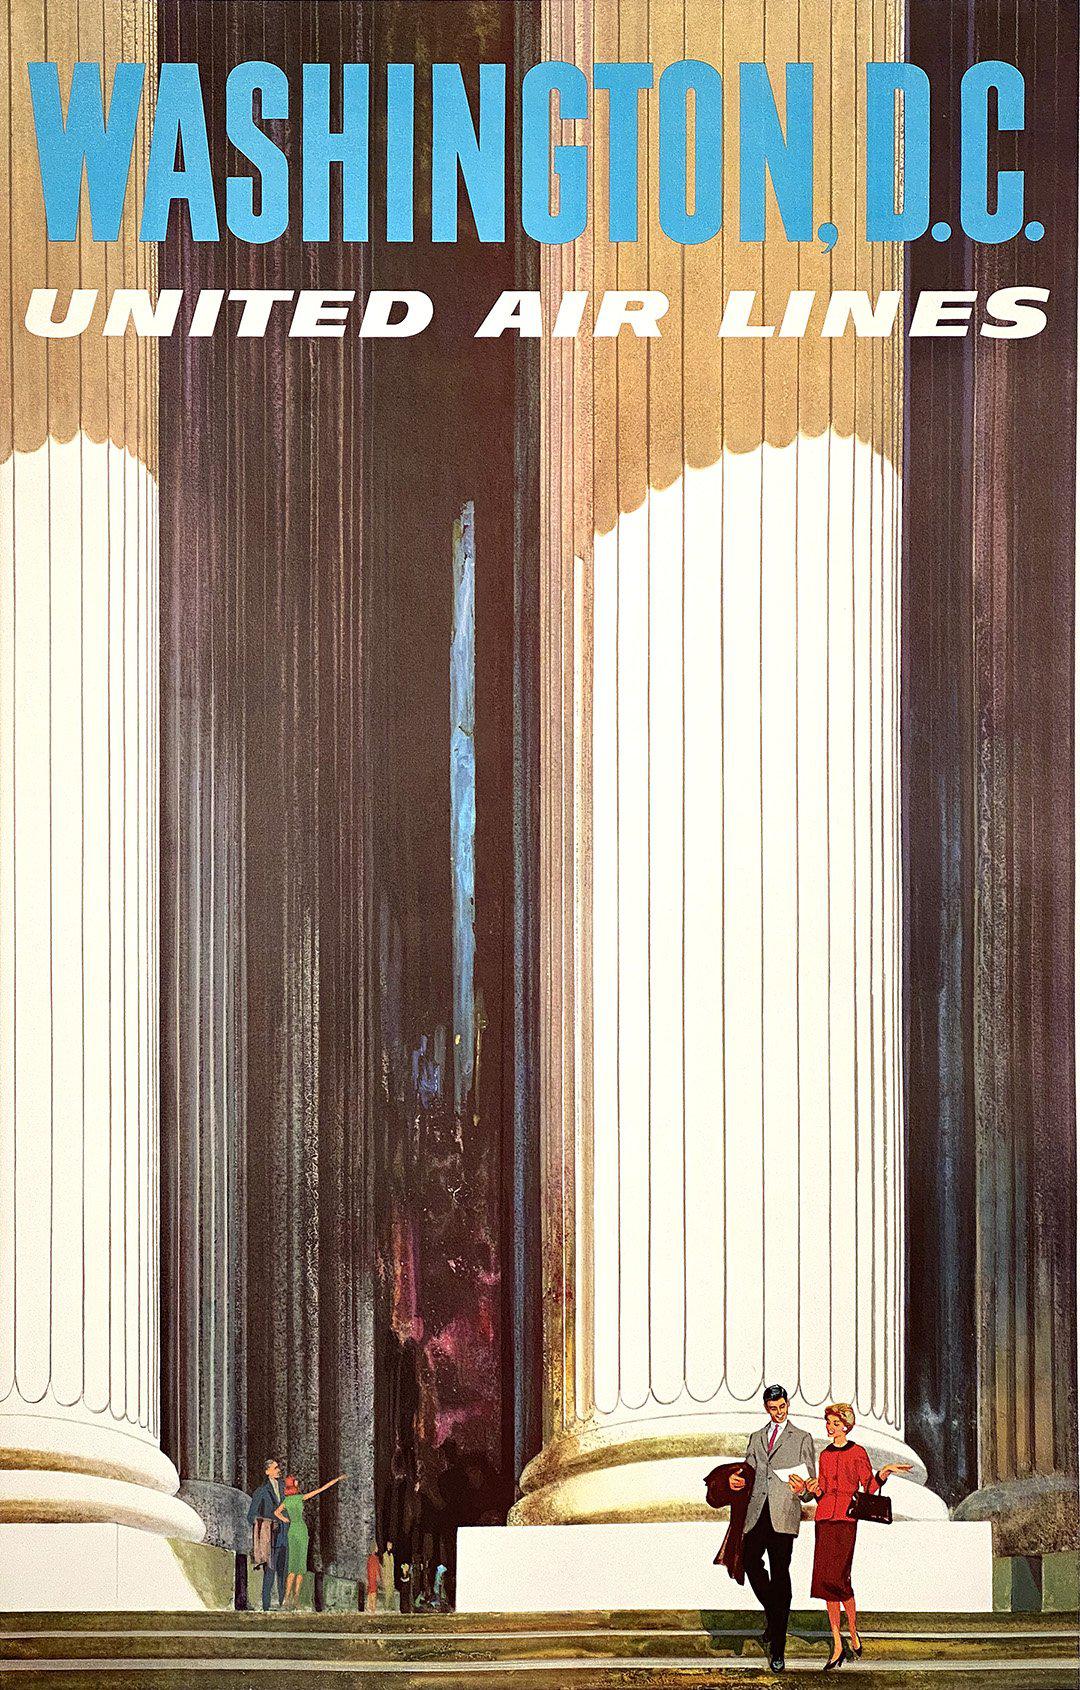 United Air Lines Washington DC Original Vintage Travel Poster c1960 by Stan Galli